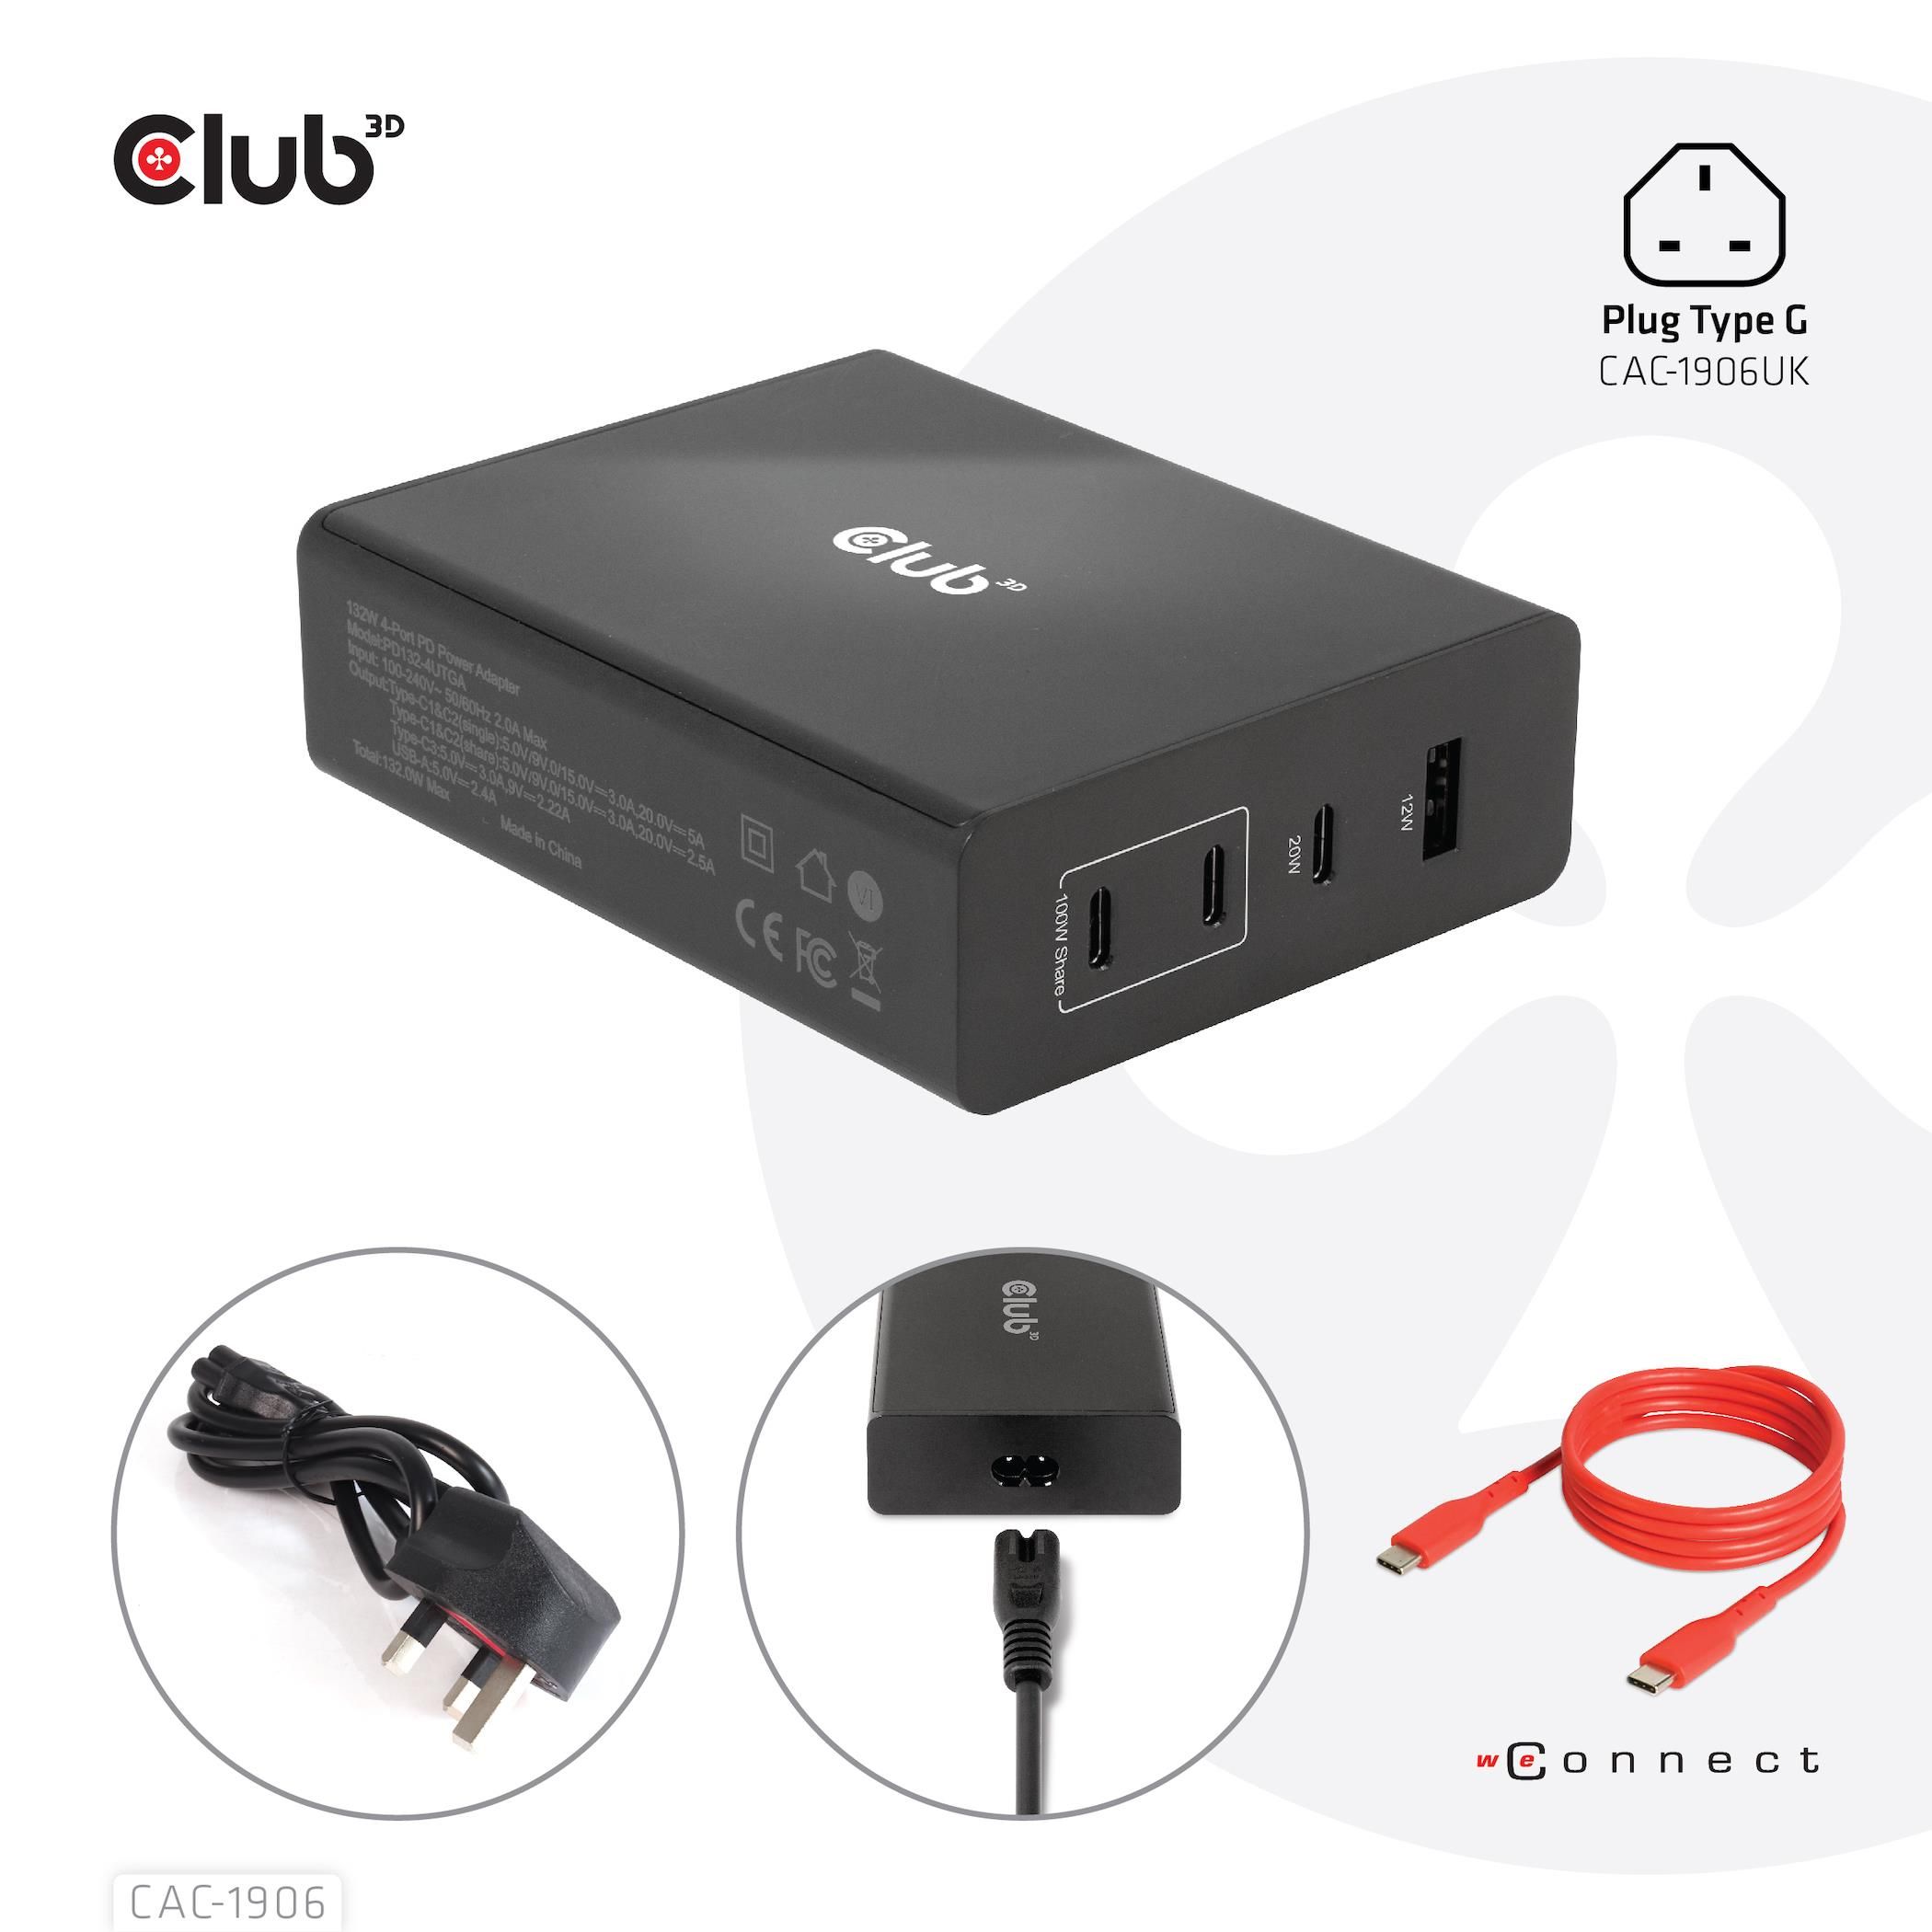 Club3d Caricabatterie Per Dispositivi